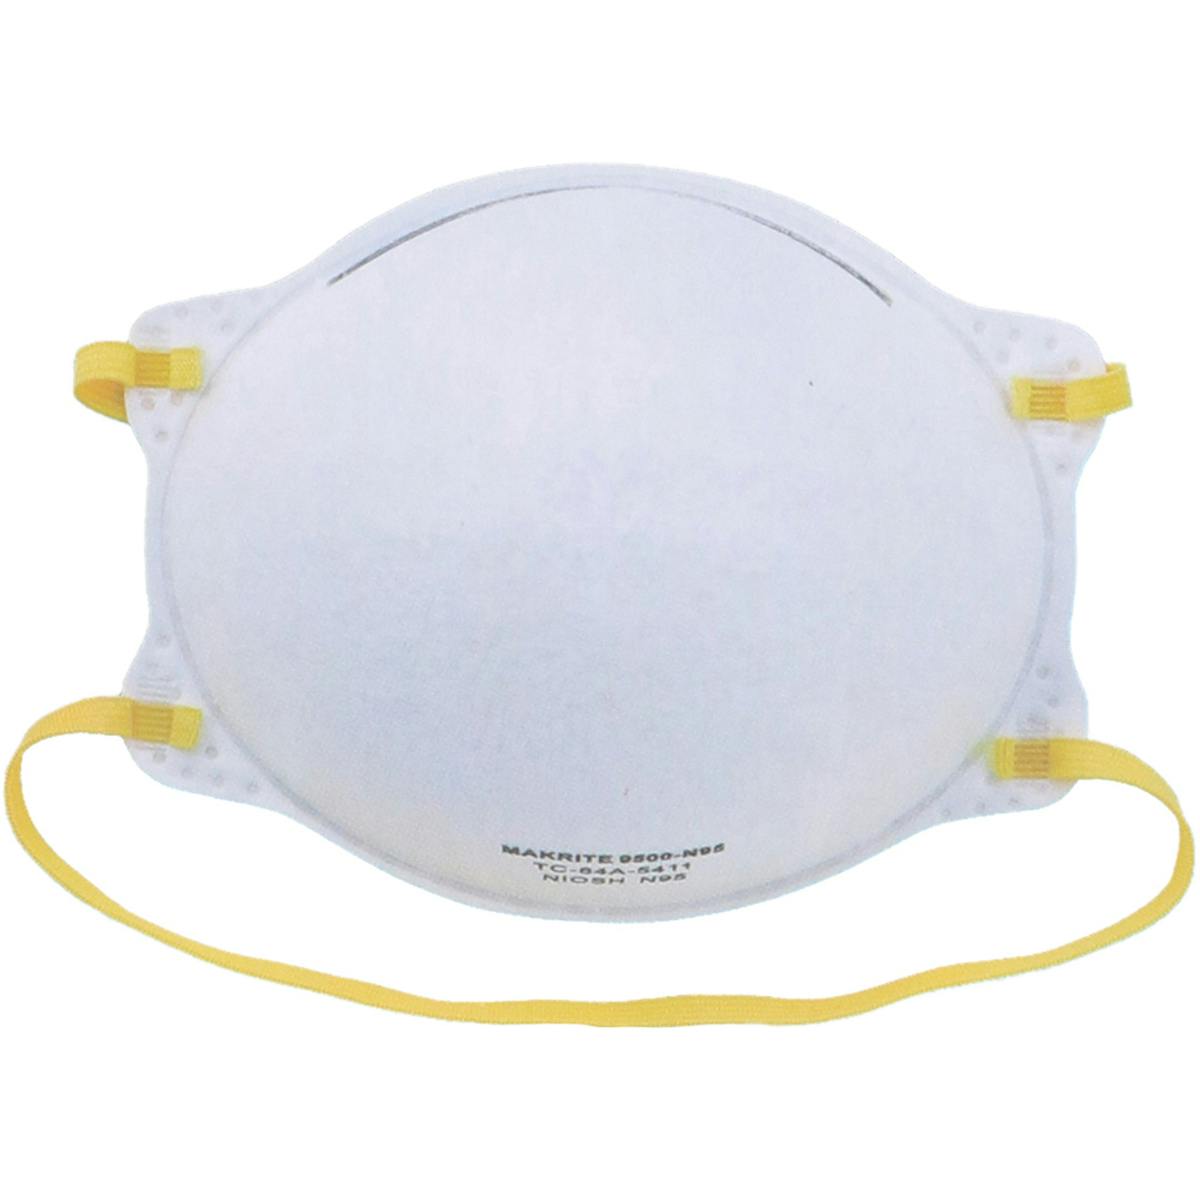 N95 Disposable Respirator - 20 Pack, White (MK9500-N95) - OS